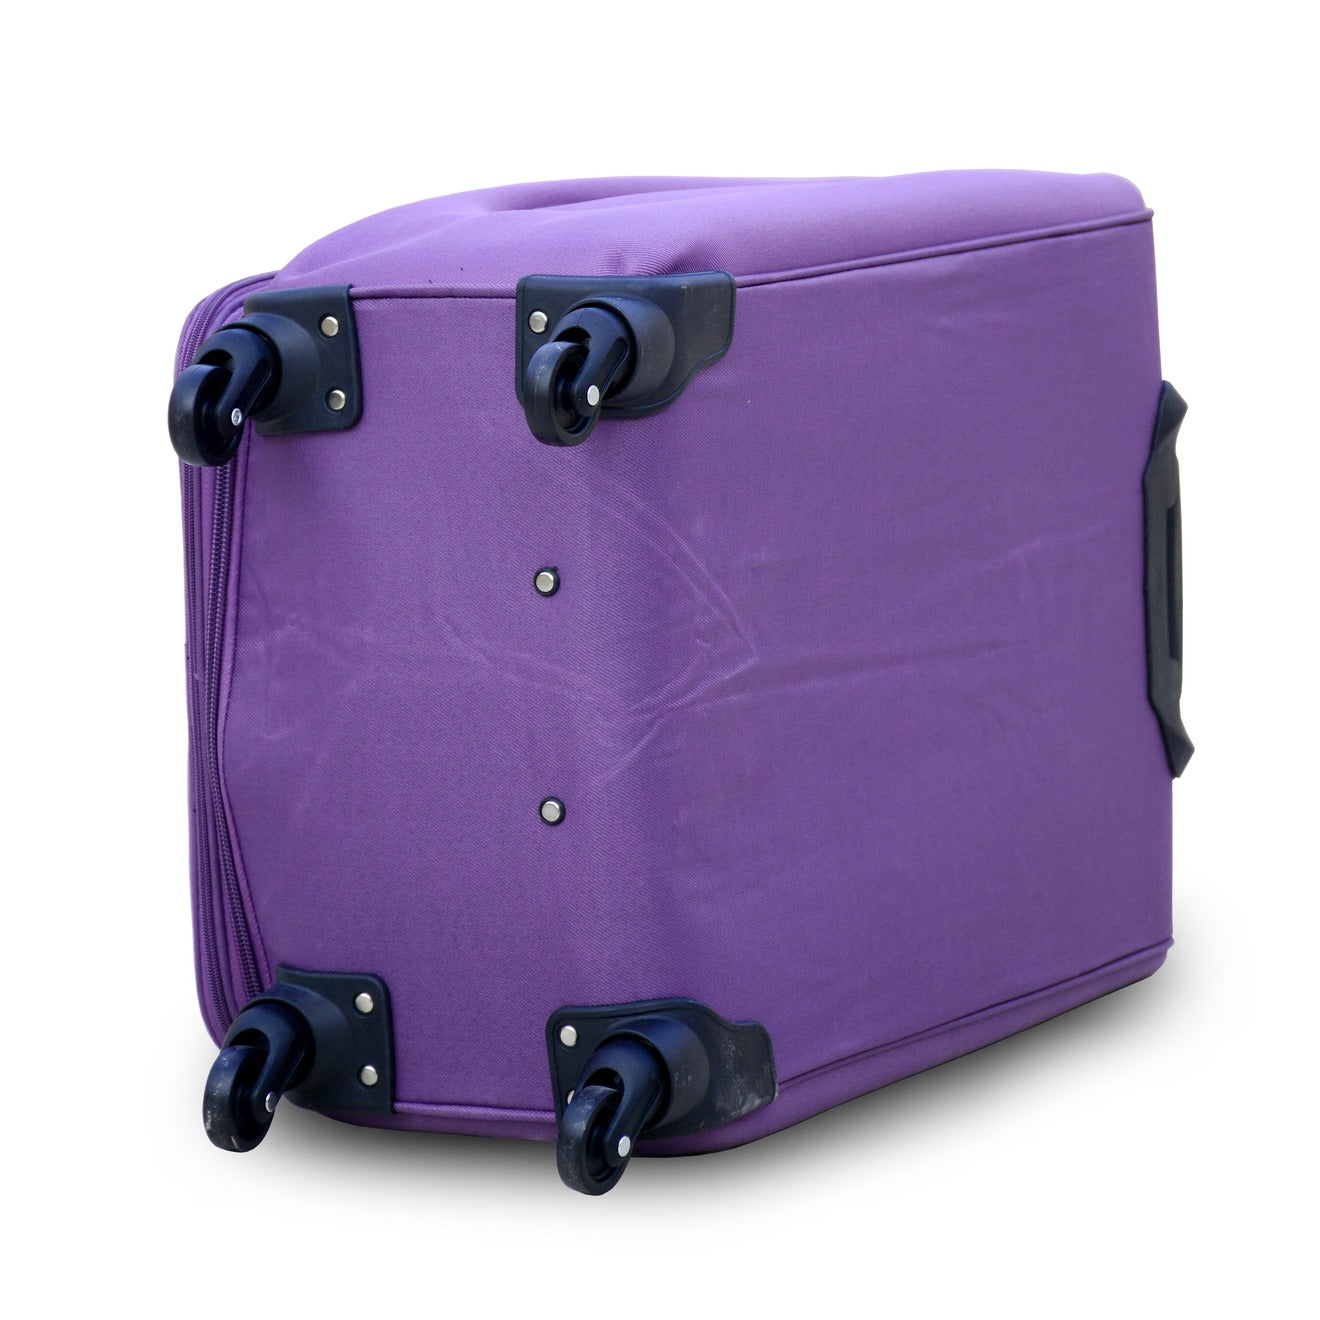 20" SJ JIAN 4 Wheel Lightweight Soft Material Carry On Luggage Bag Zaappy